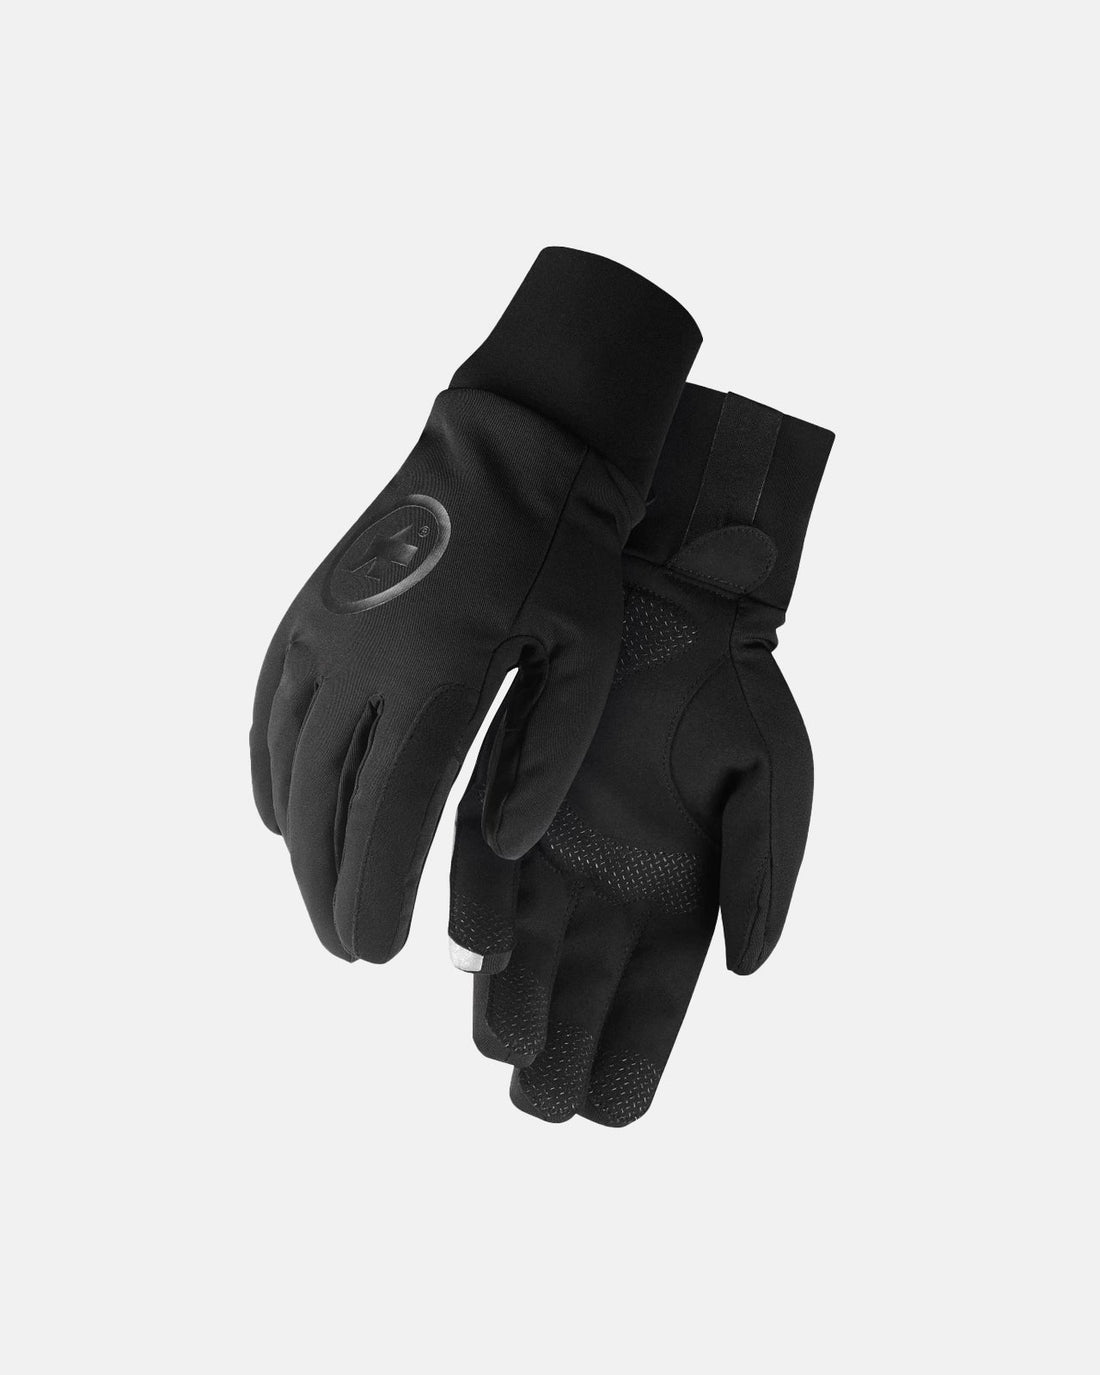 Assos Ultraz Winter Gloves - Black